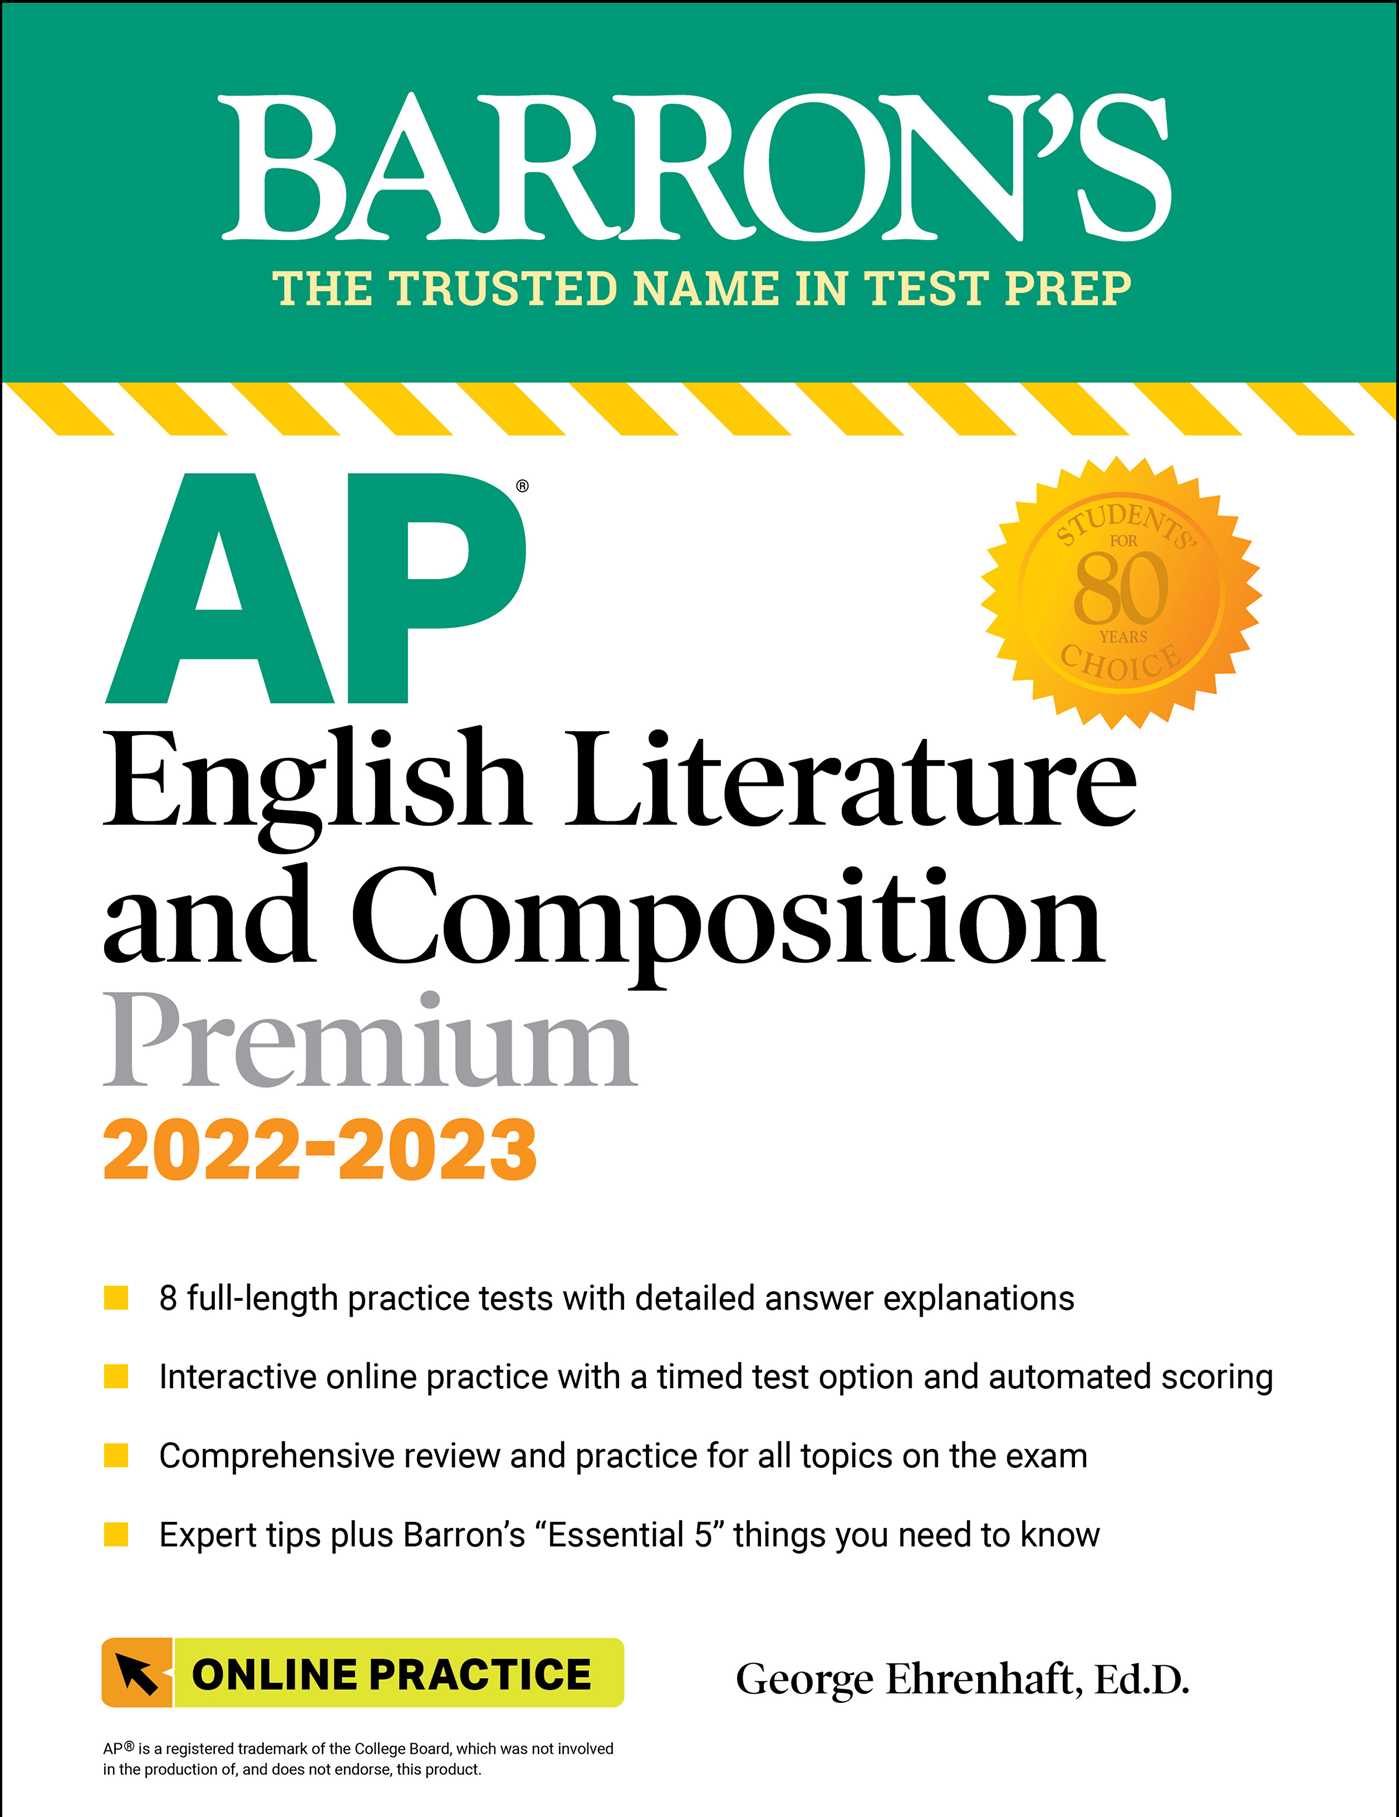 pdf-ebook-barrons-ap-english-literature-and-composition-premium-2022-2023-interesedu